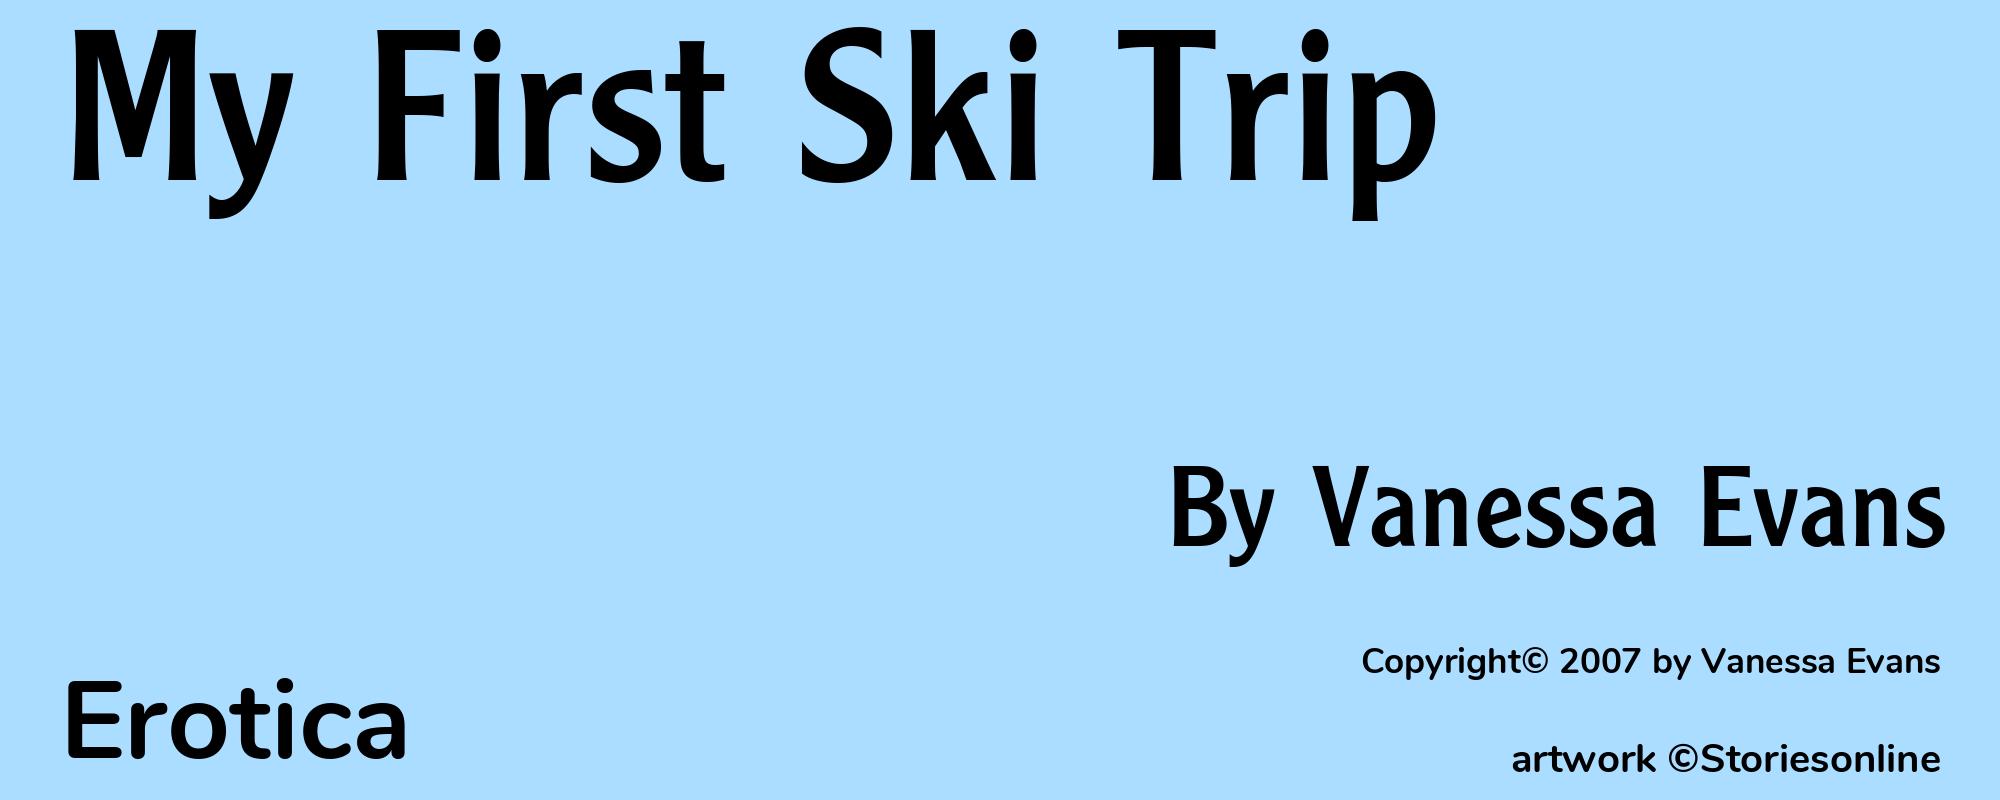 My First Ski Trip - Cover